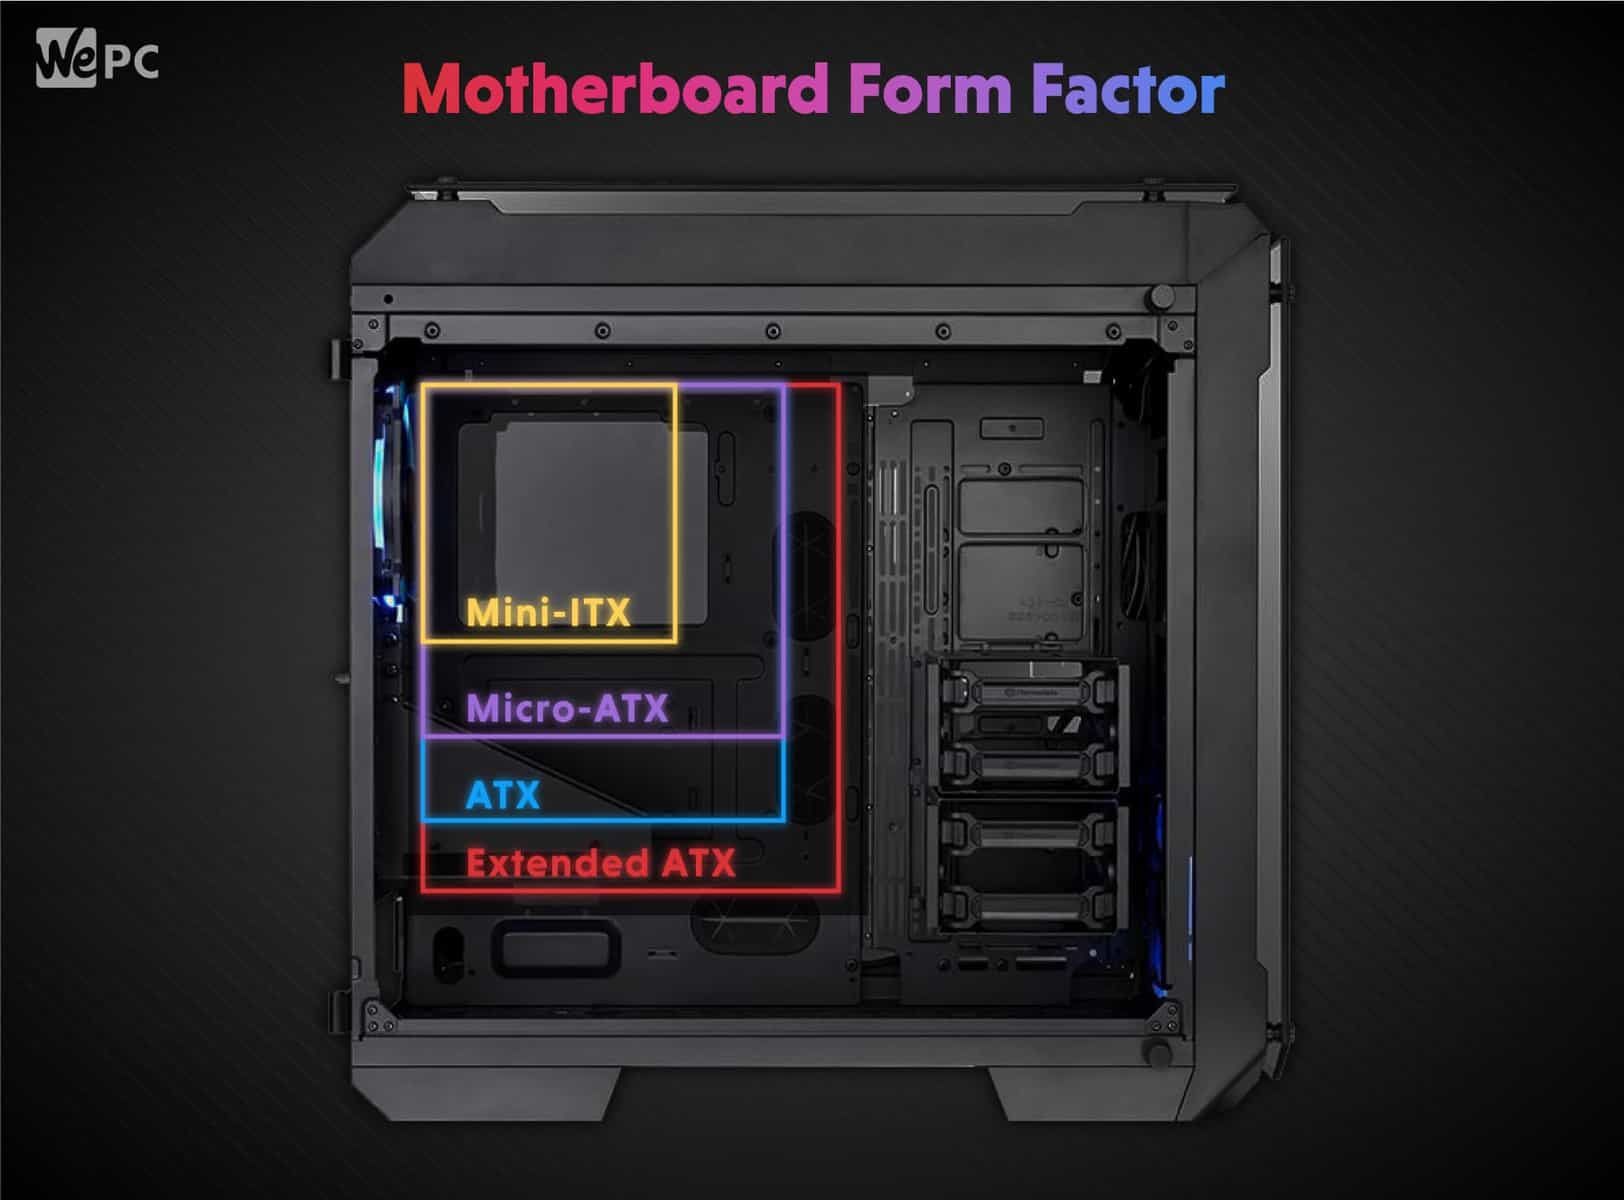 Motherboard form factor